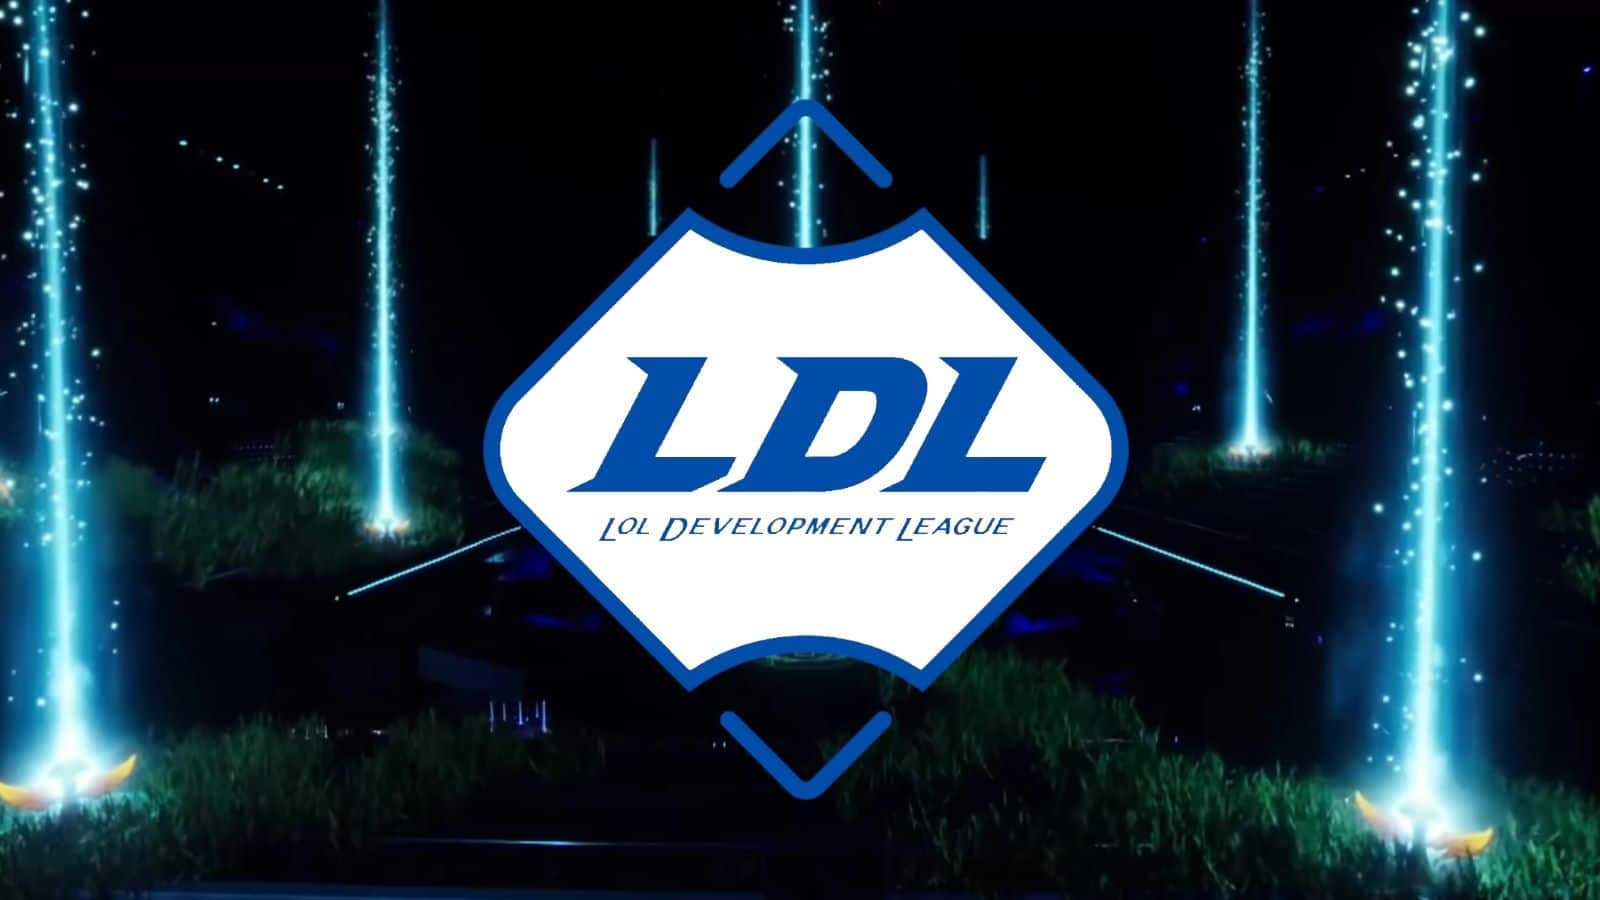 LDL matchfix scandal